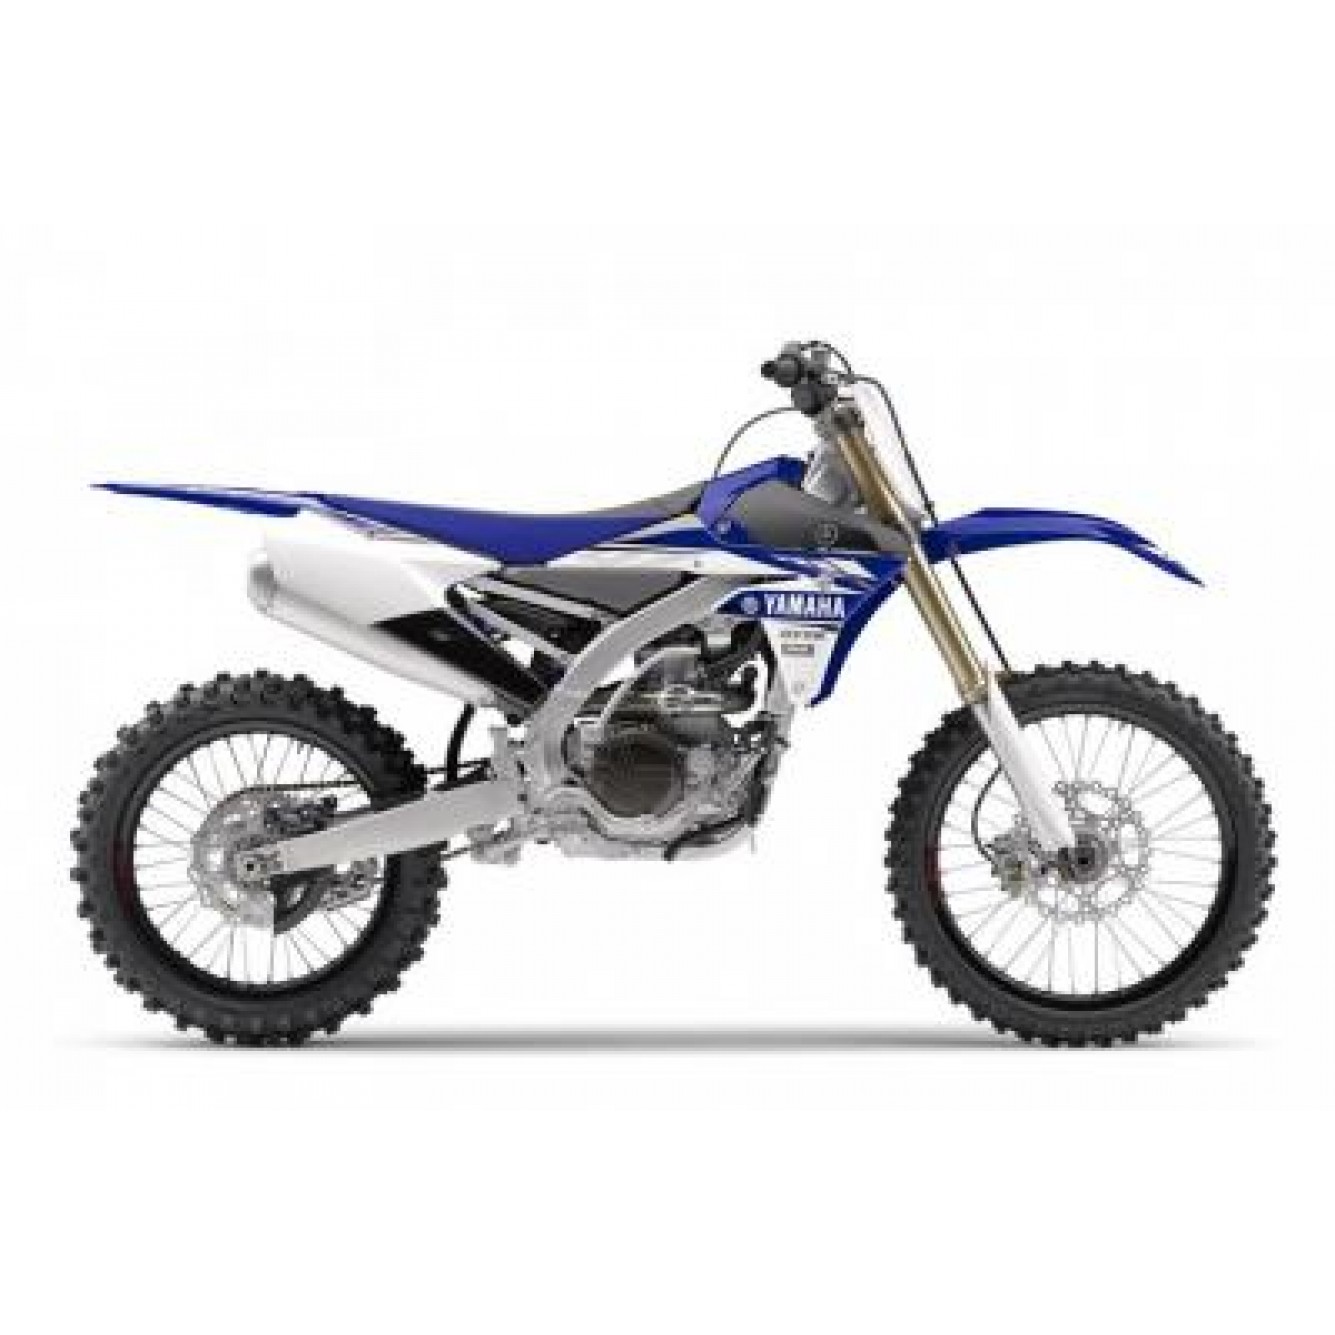 Yamaha | Schaalmotor YZ 450 F schaal 1:12